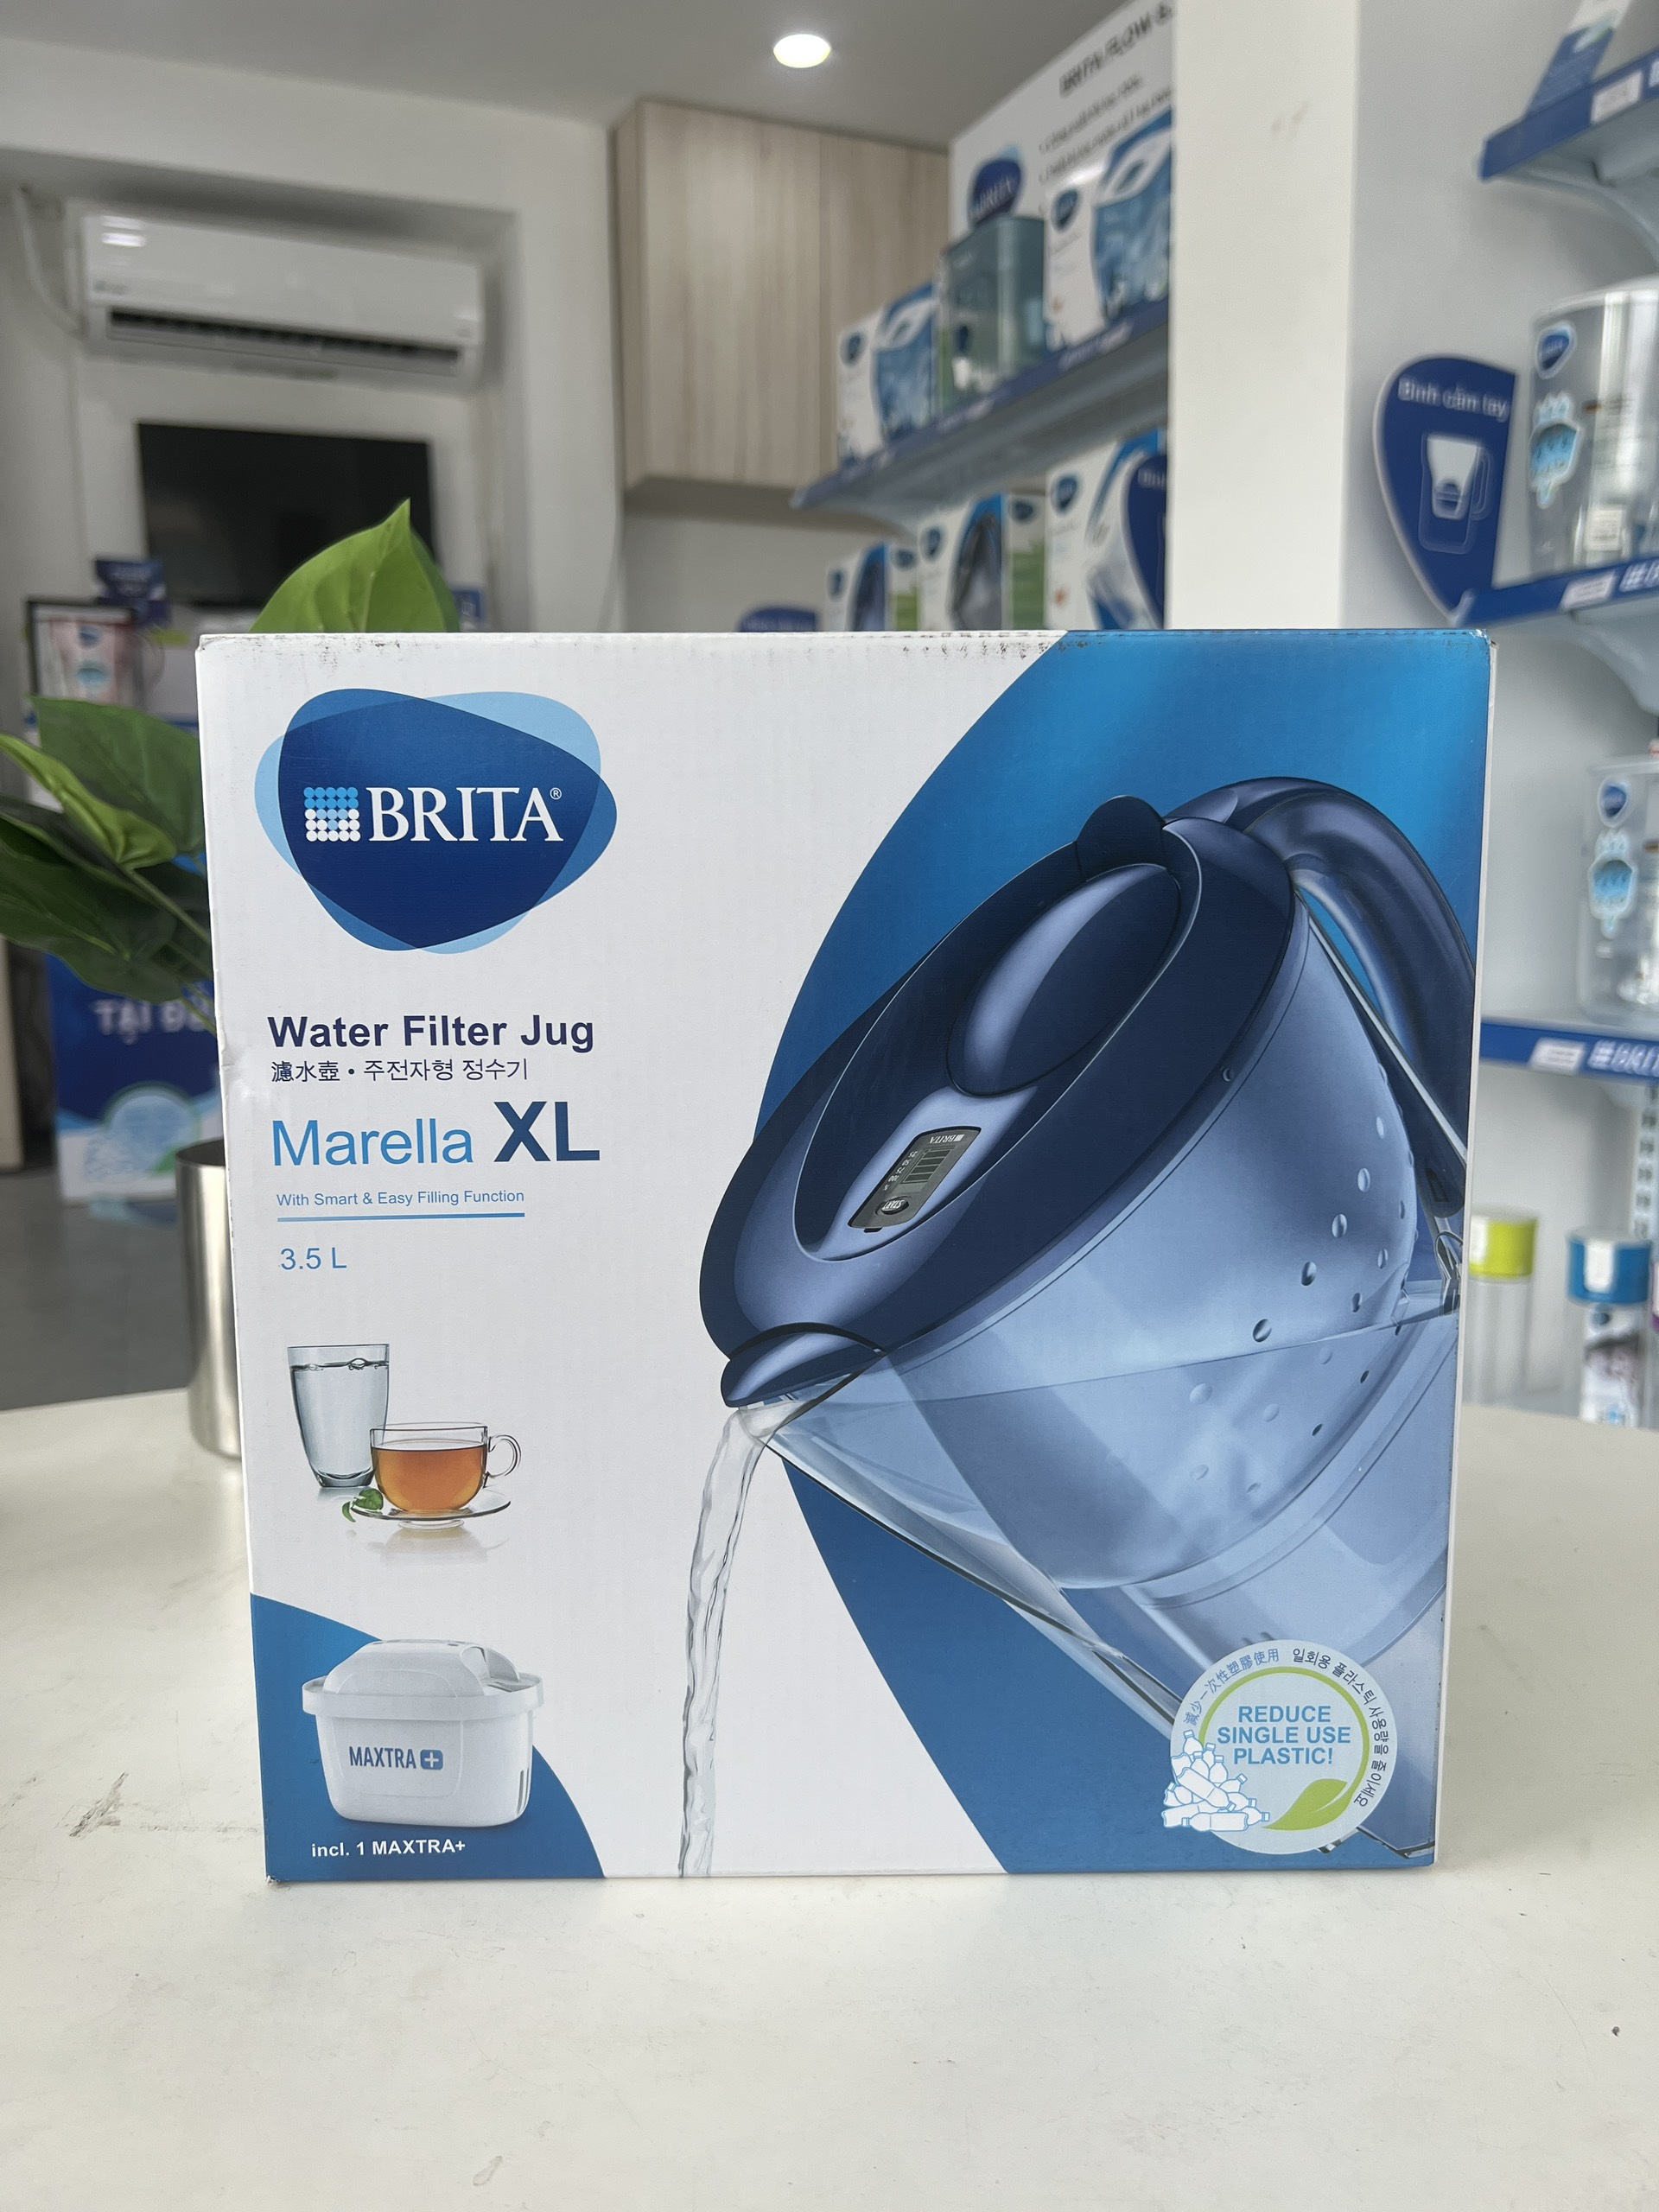 Bình Lọc Nước BRITA Marella XL Blue - 3.5L (Kèm Maxtra Plus)